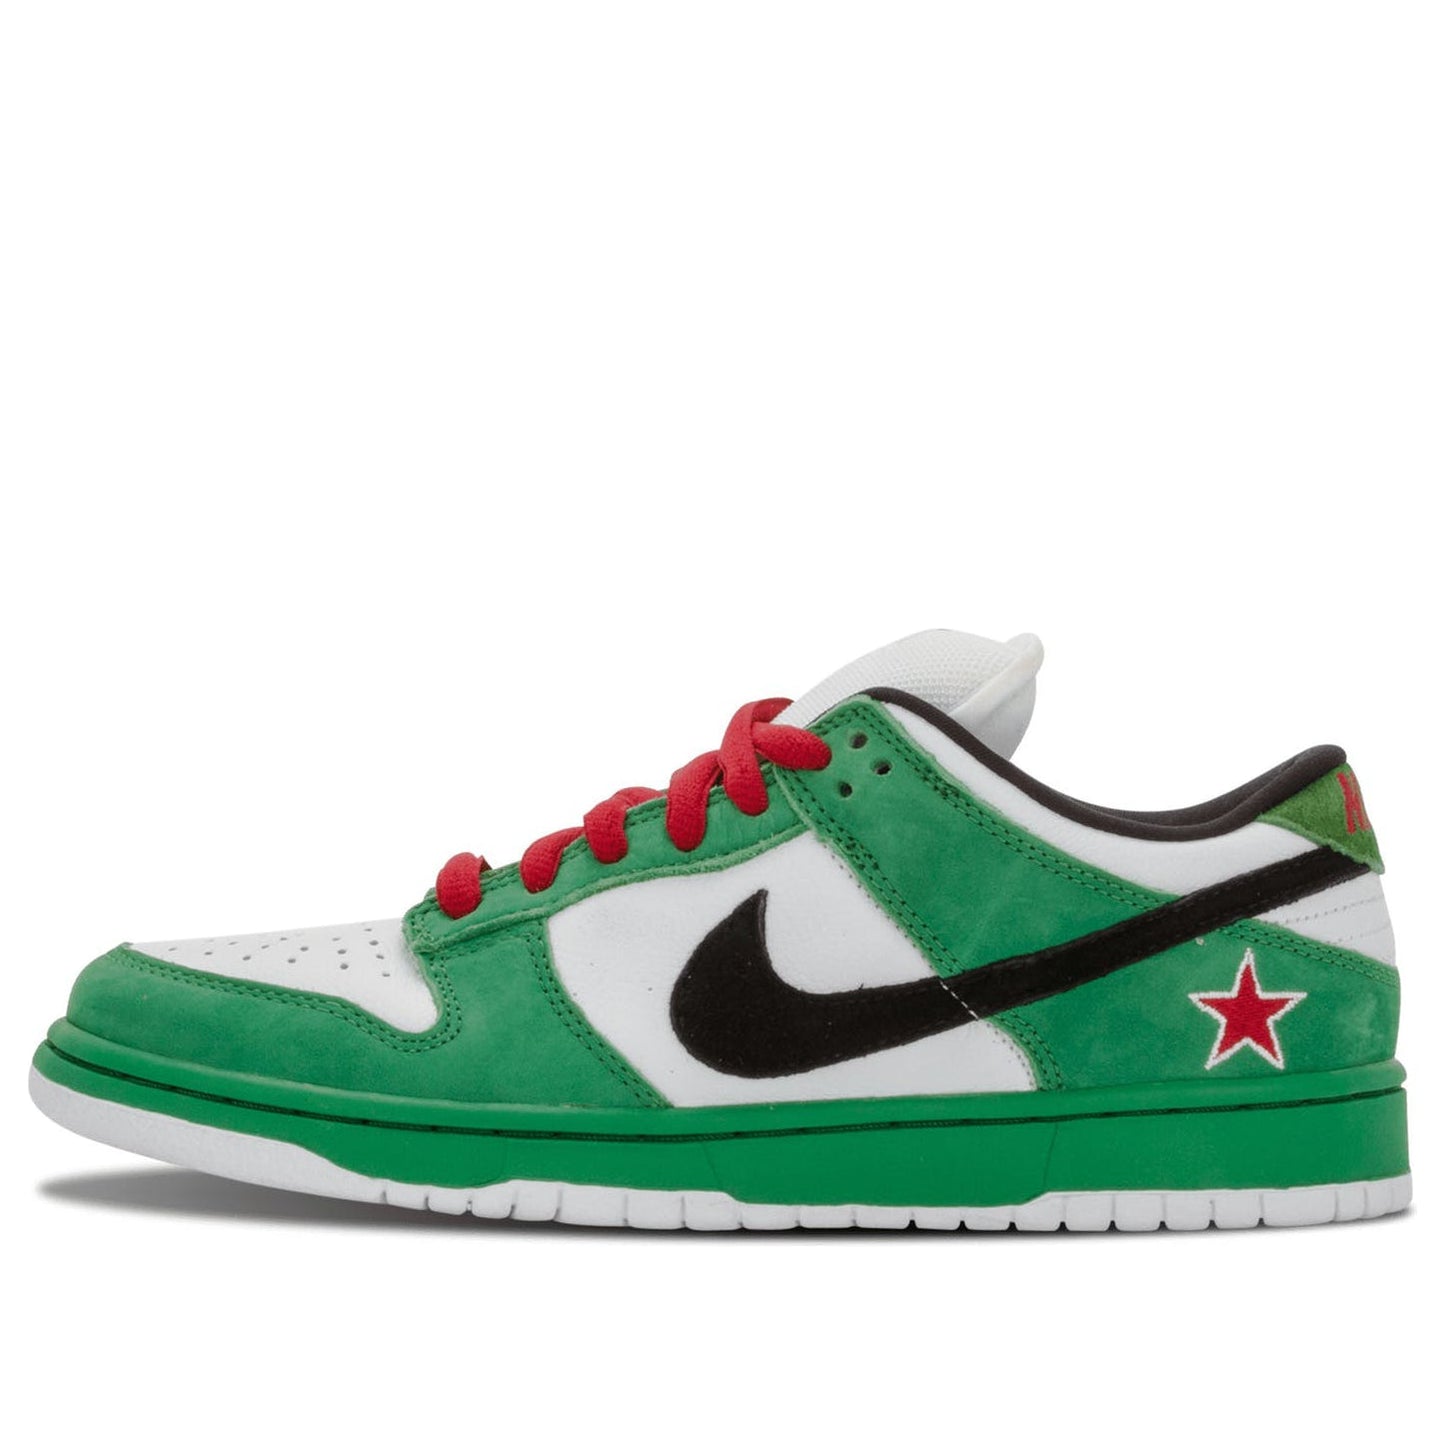 Nike Dunk Low Pro SB 'Heineken'  304292-302 Iconic Trainers